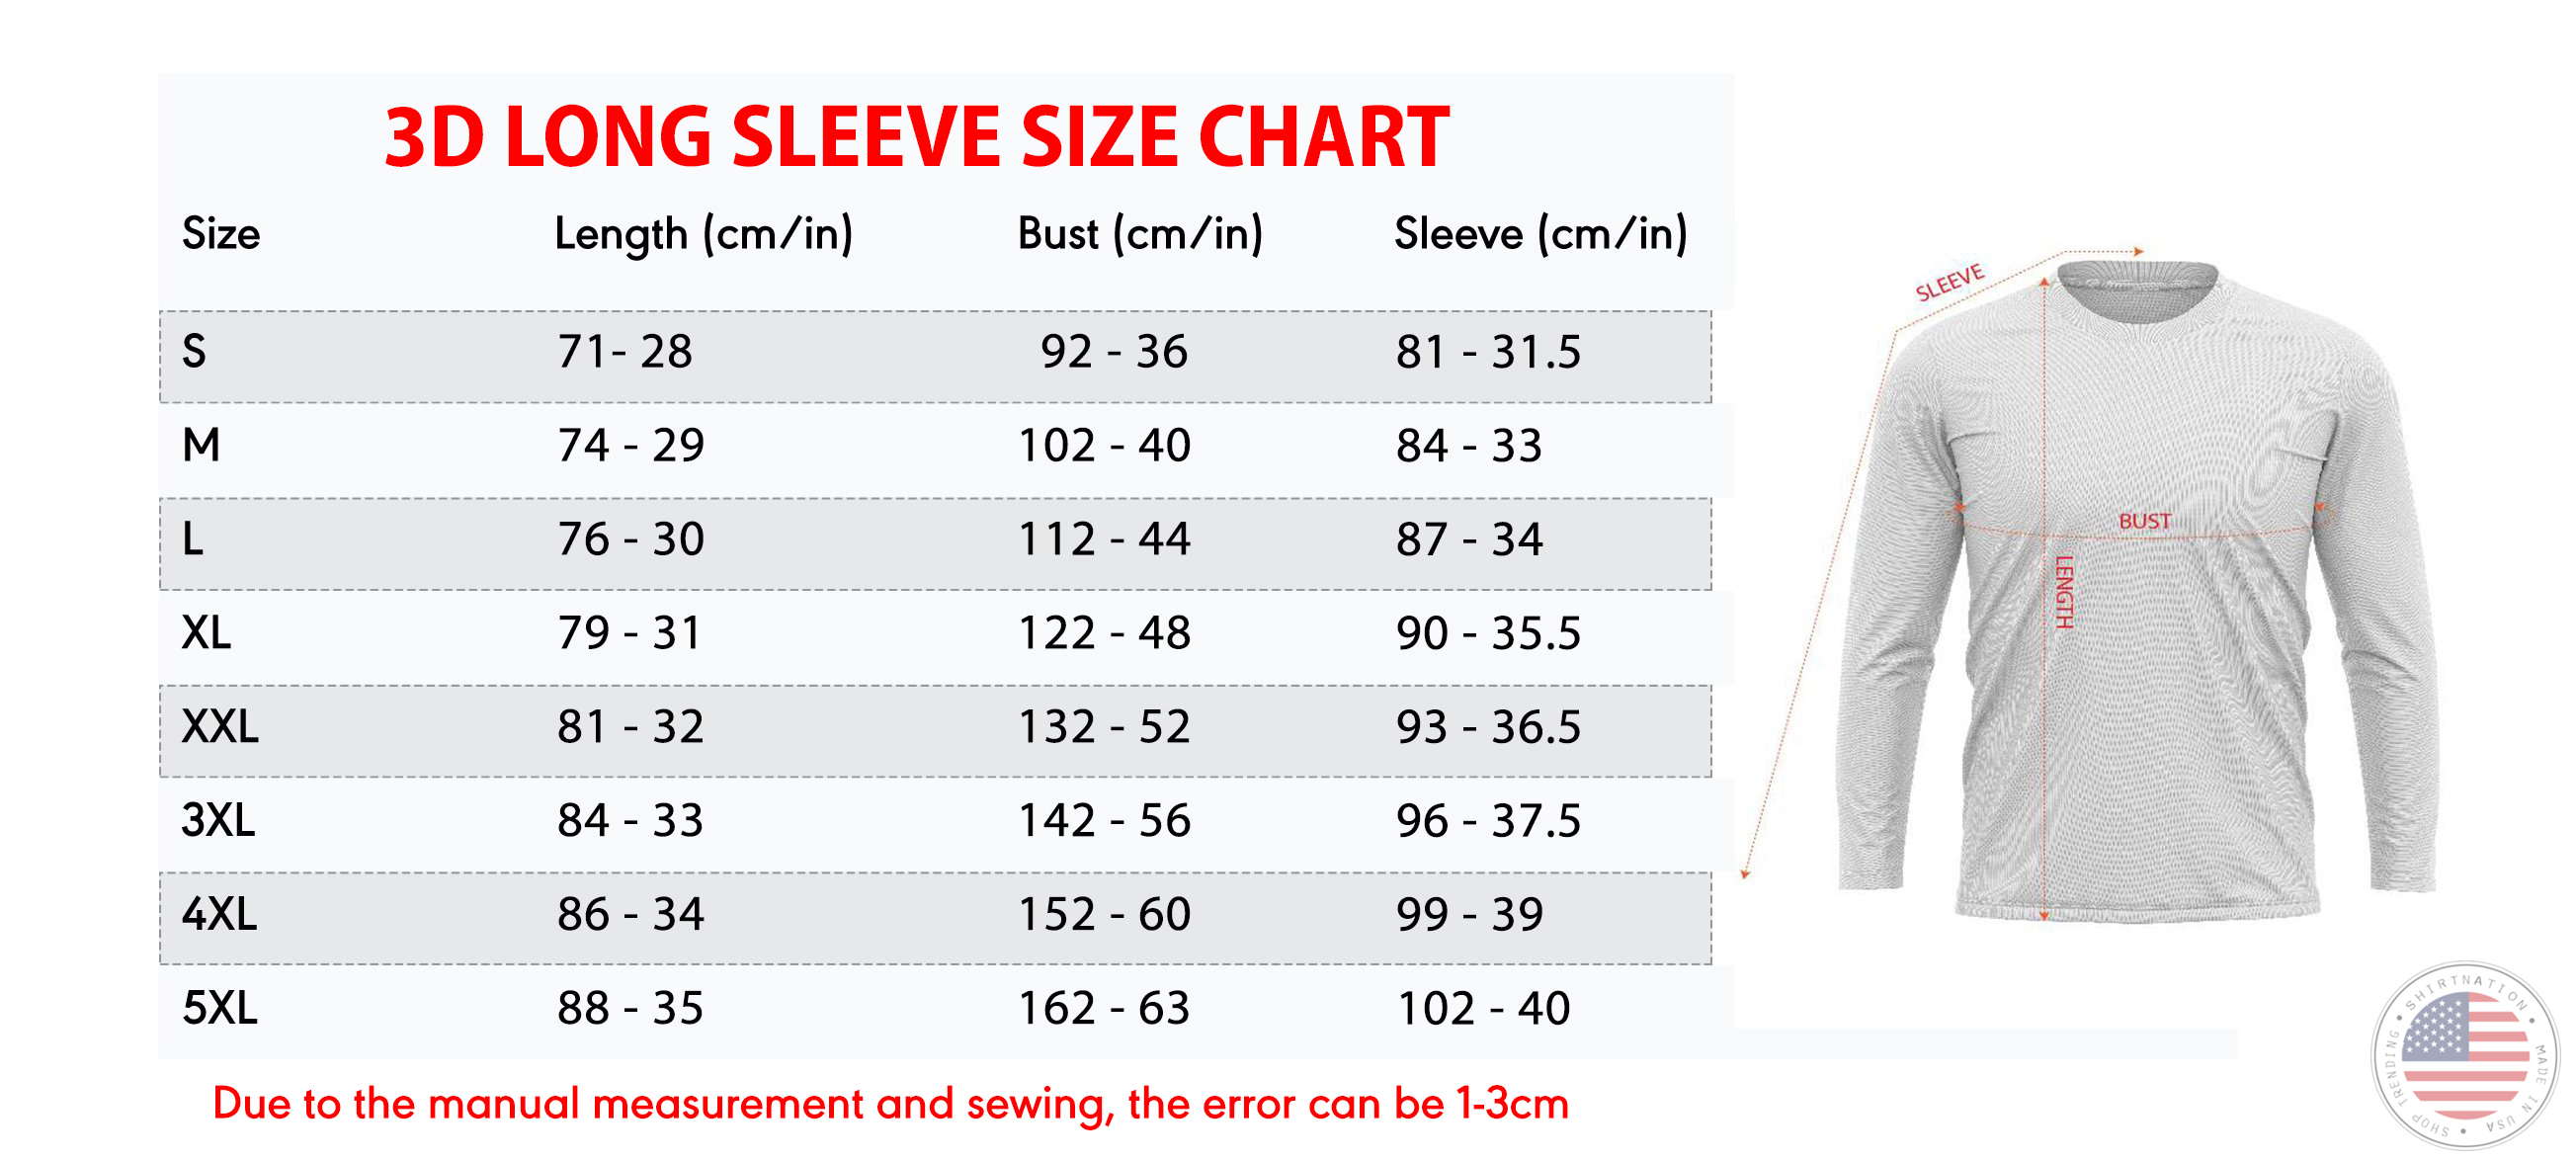 Shirtnation Long Sleeve Size Chart